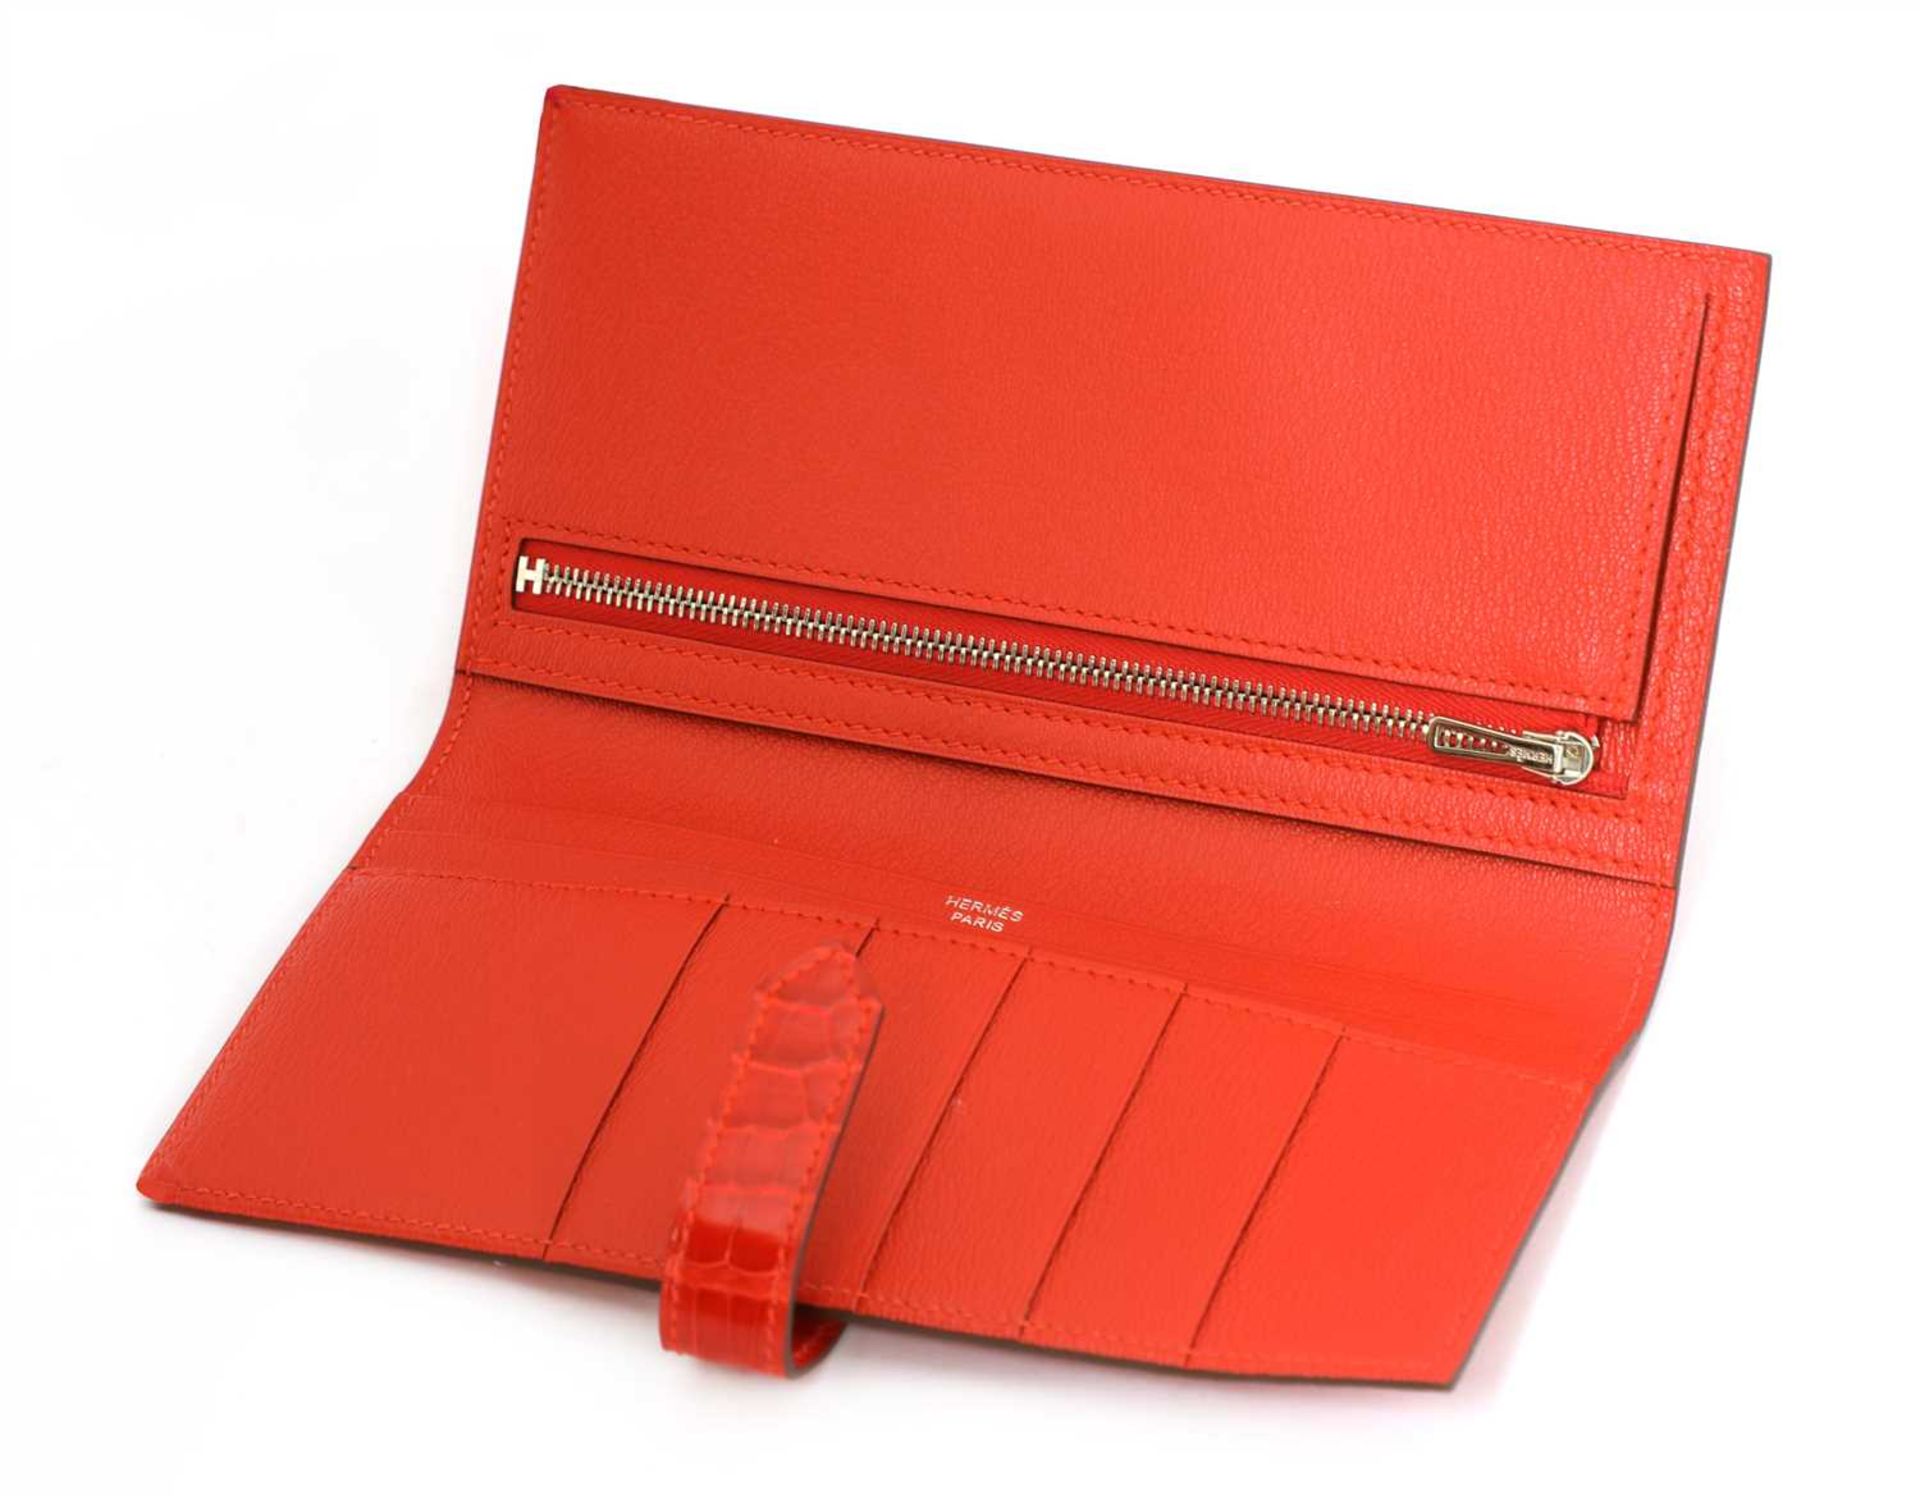 An Hermès red alligator skin wallet - Image 2 of 3